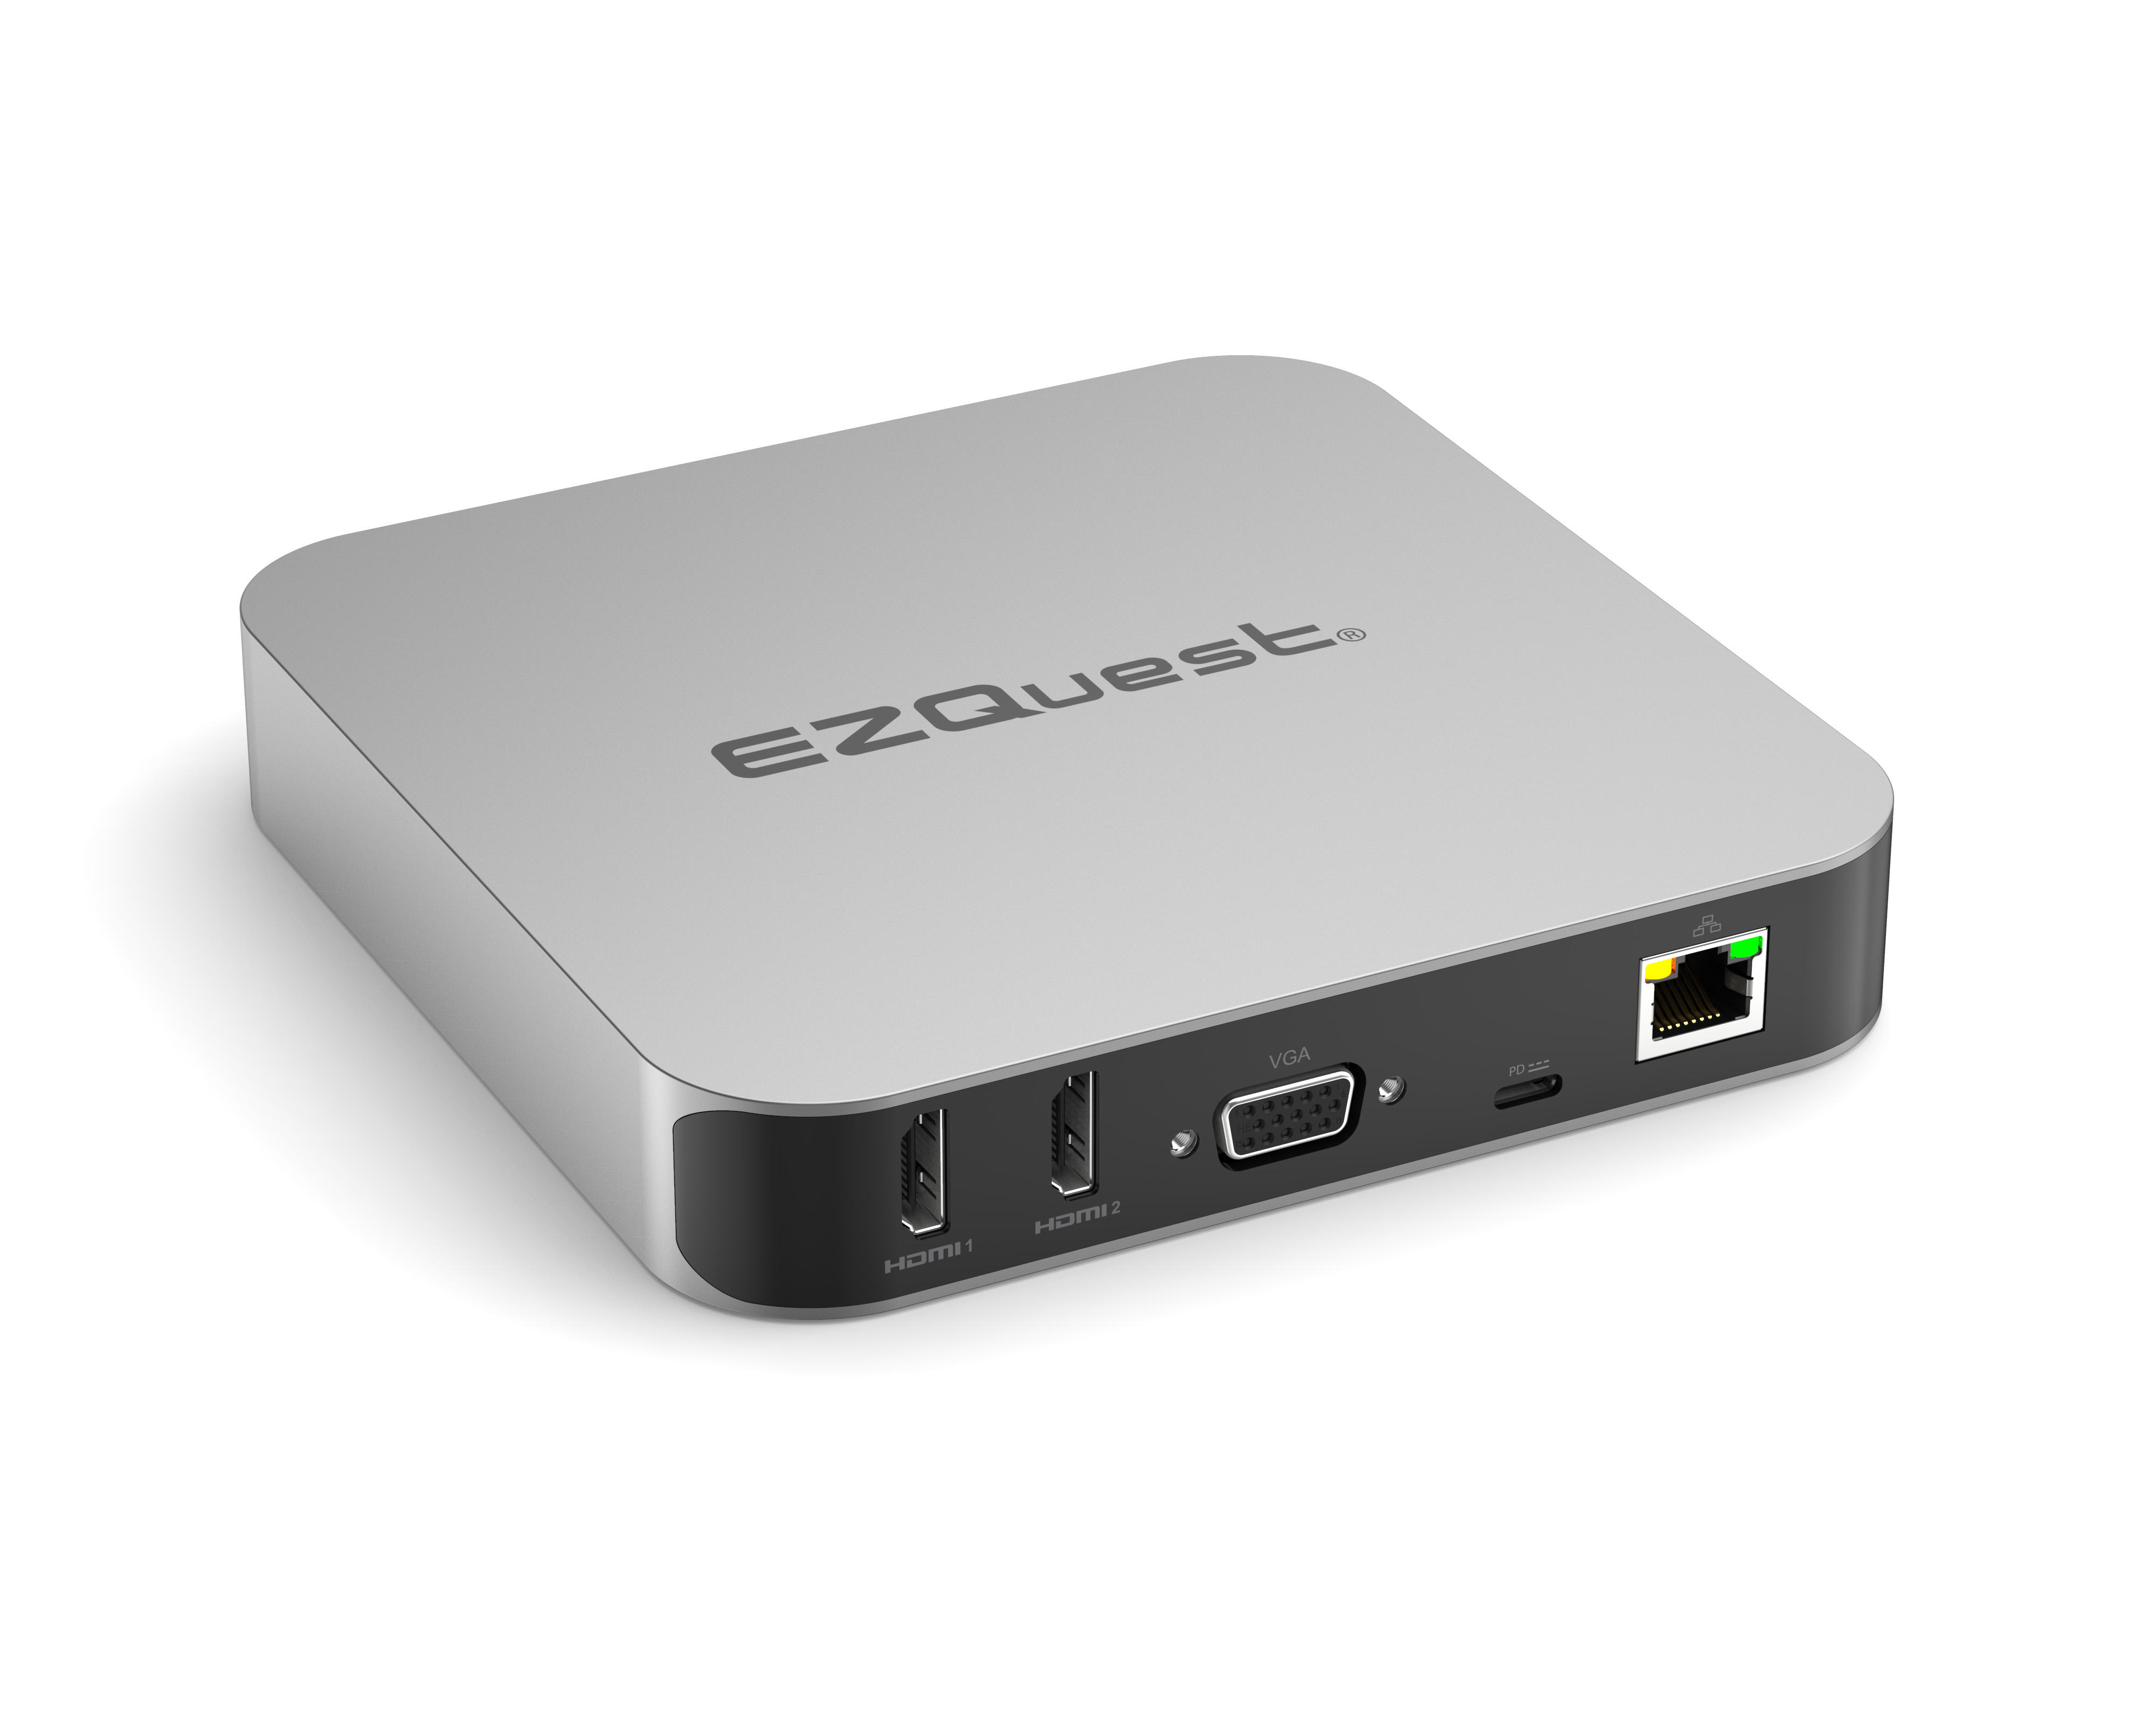 USB-C Multimedia Adapter, 4K HDMI, Gigabit Ethernet, VGA